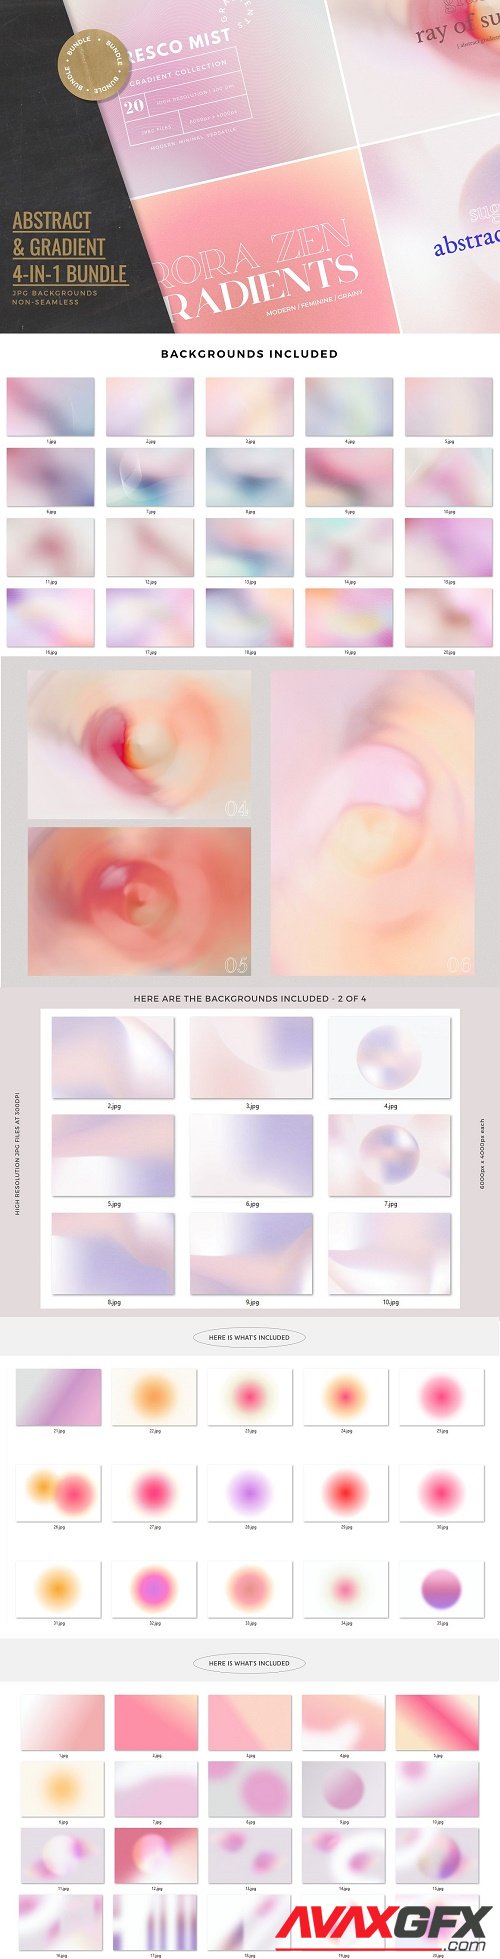 Bundle Abstract & Gradient 4-in1 - 6862480 - (Fresco Mist, Dreamy Sun-Kissed, Sugar Delight, Aurora Zen)